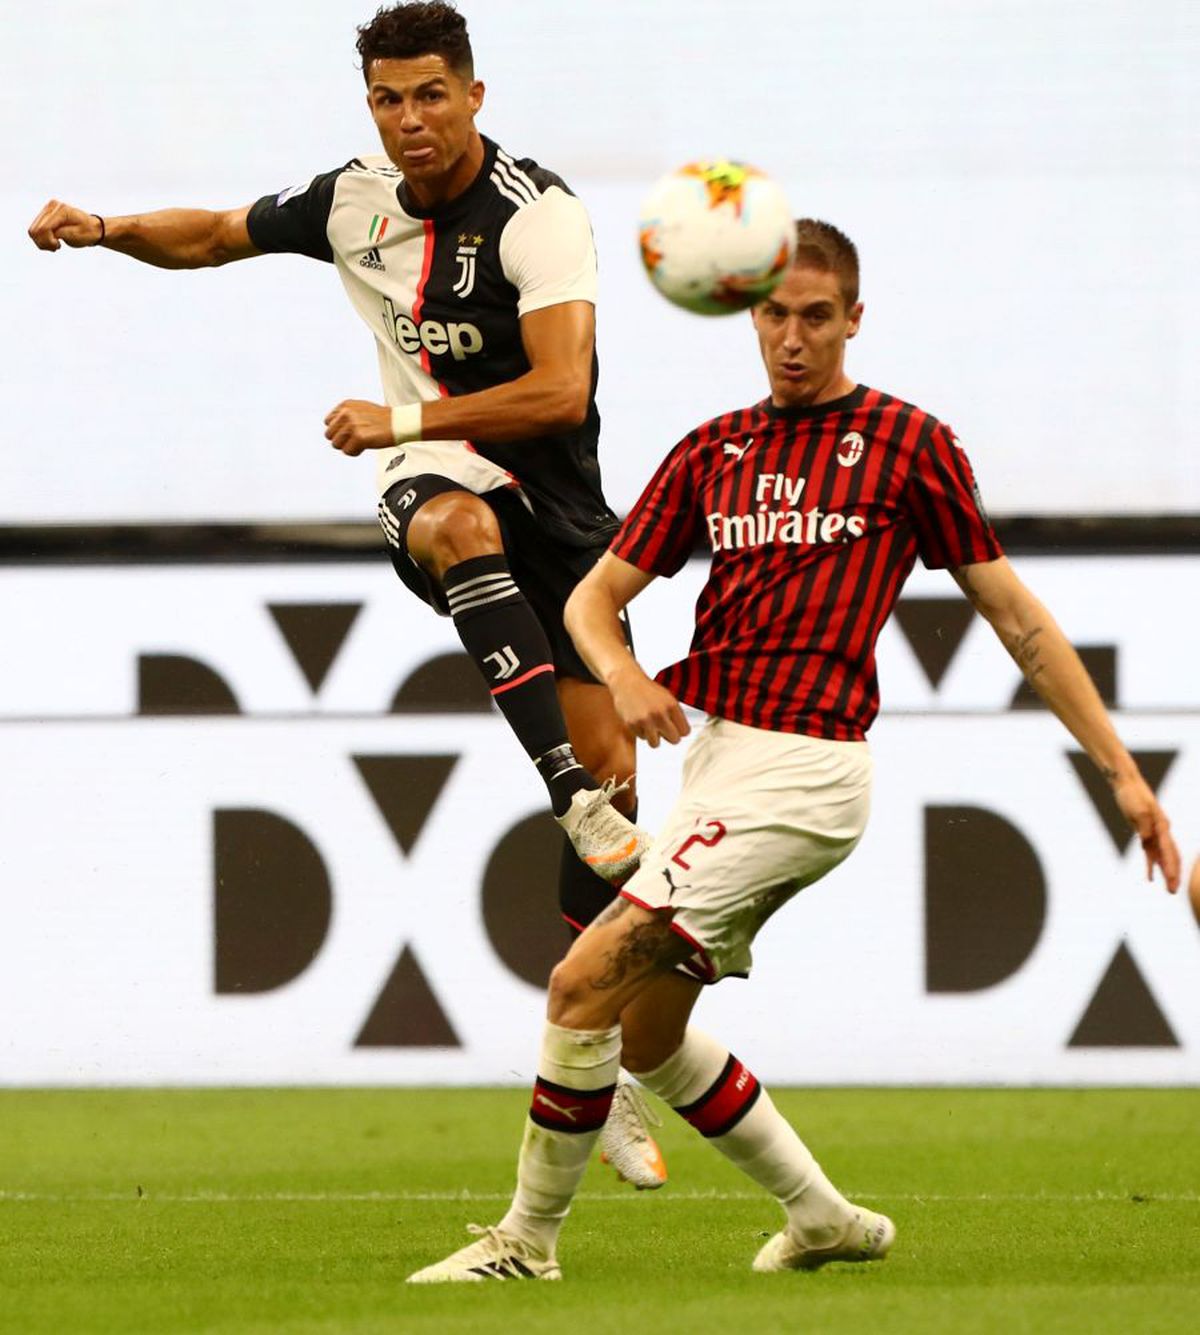 MILAN - JUVENTUS 4-2. Cum a vrut Cristiano Ronaldo să-l intimideze pe Ibrahimovic » Zlatan nu s-a lăsat mai prejos